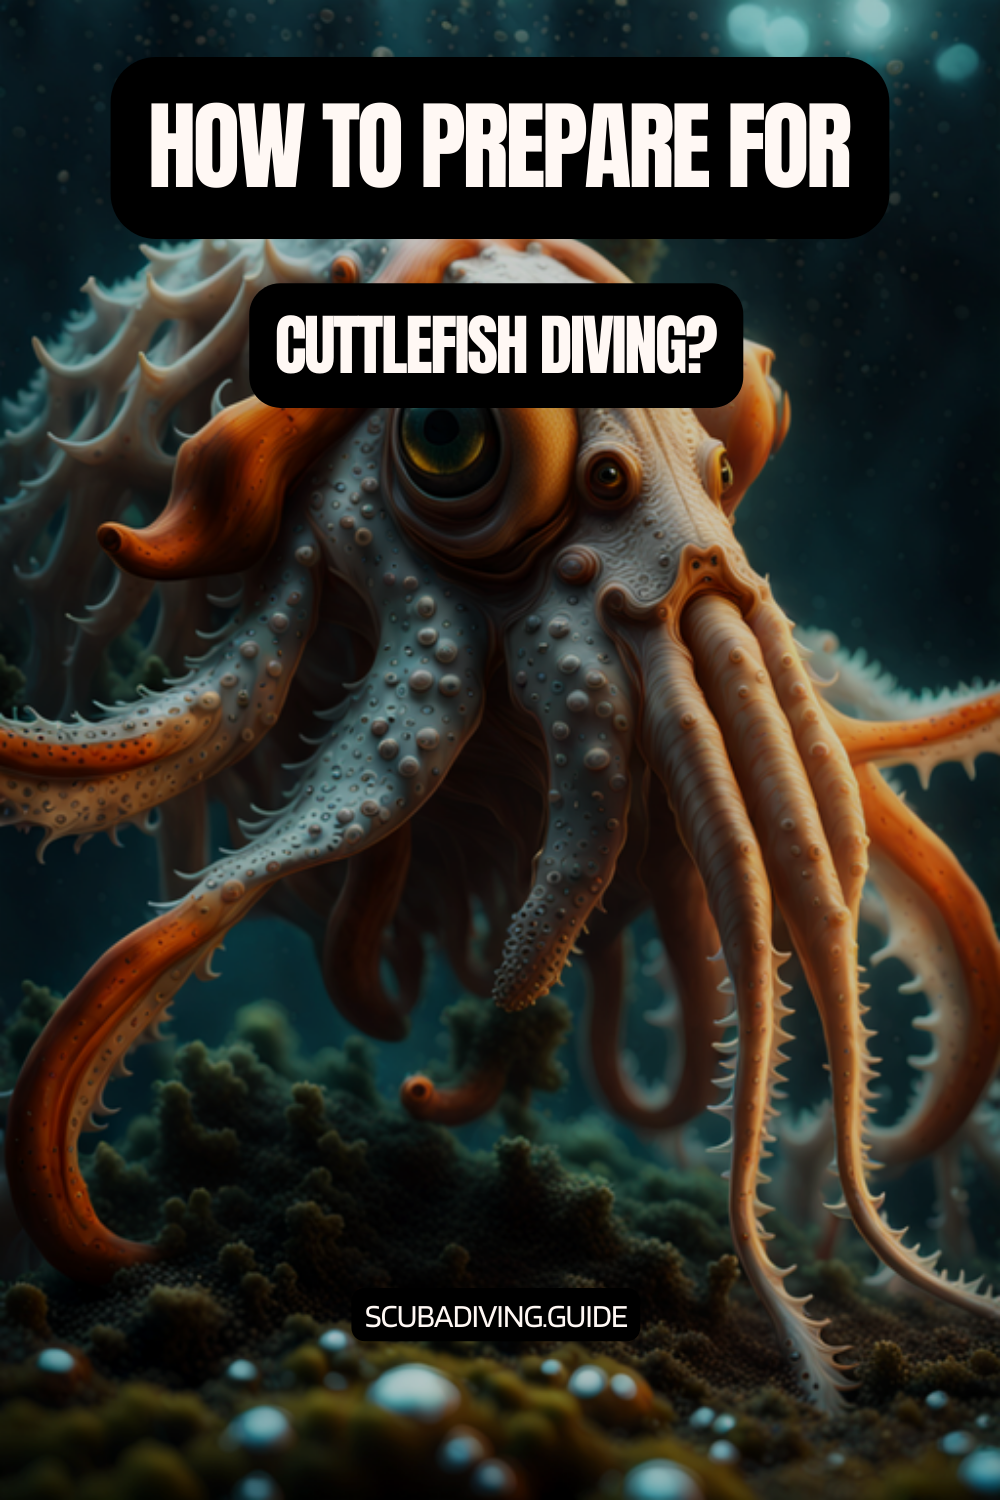 Preparing for a Cuttlefish Dive